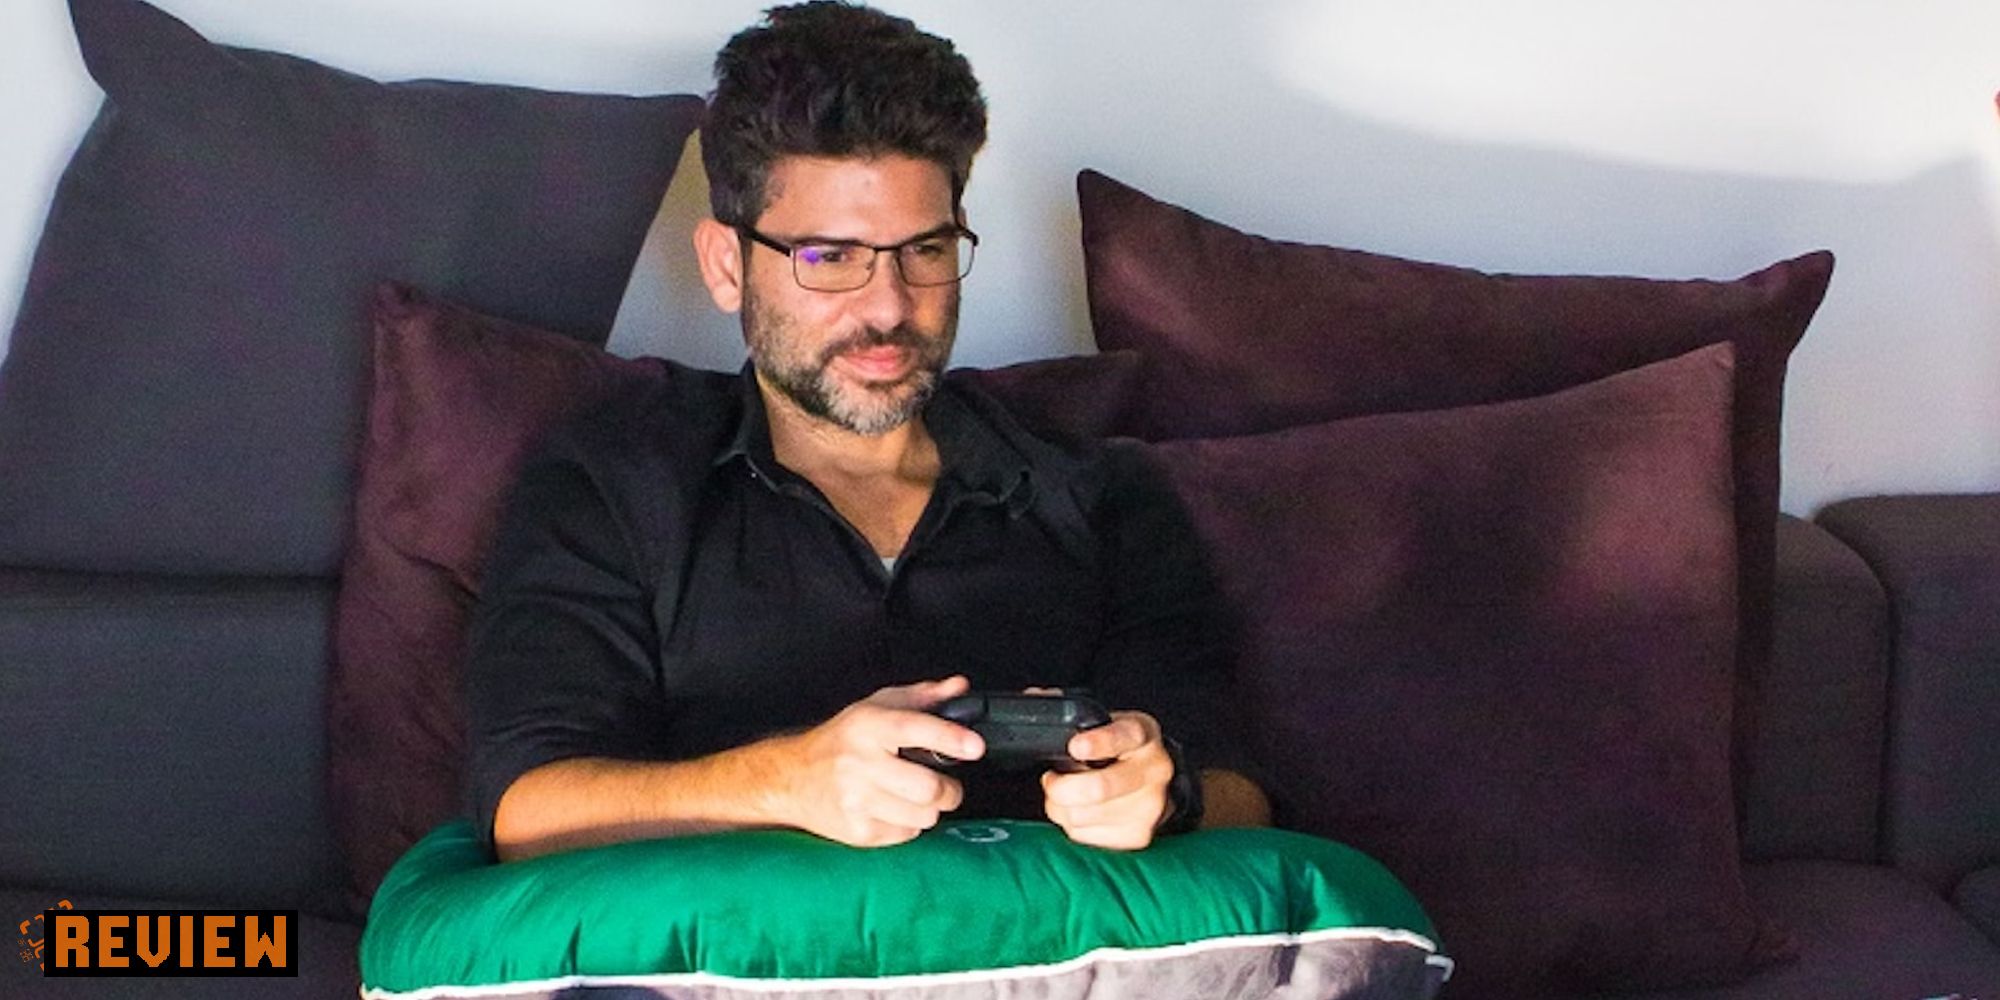 Valari Gaming Pillow review: Simple, ergonomic comfort for marathon gaming  sessions